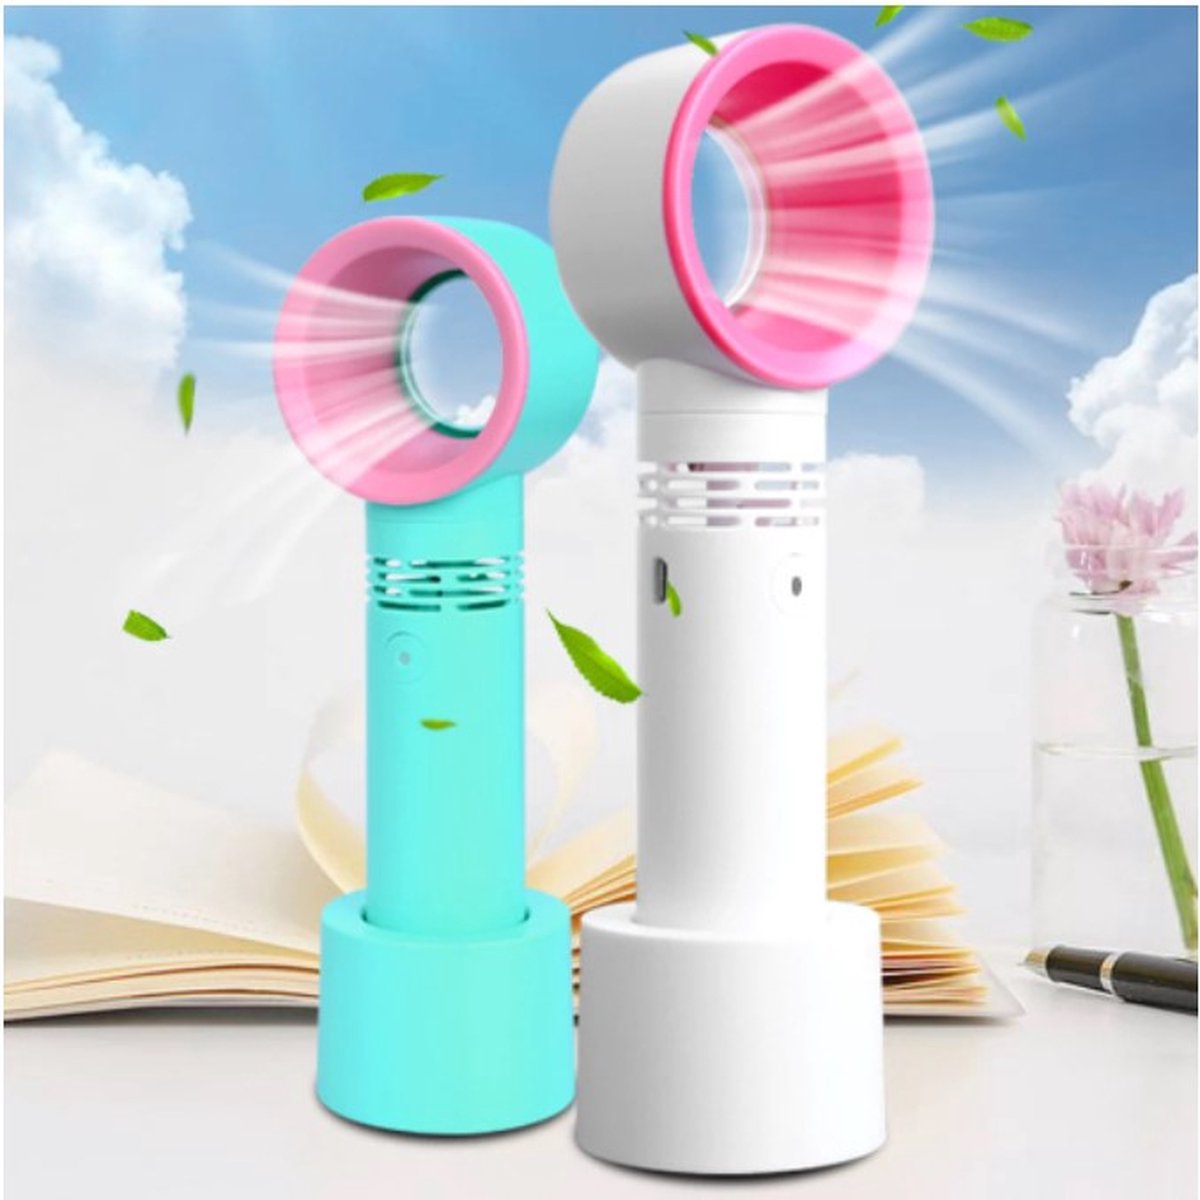 Mini Draagbare Ventilator Usb Opladen Bladeless Fan Beauty Makeup Tafel Ventilator voor Office Slaapkamer School Reizen Groen